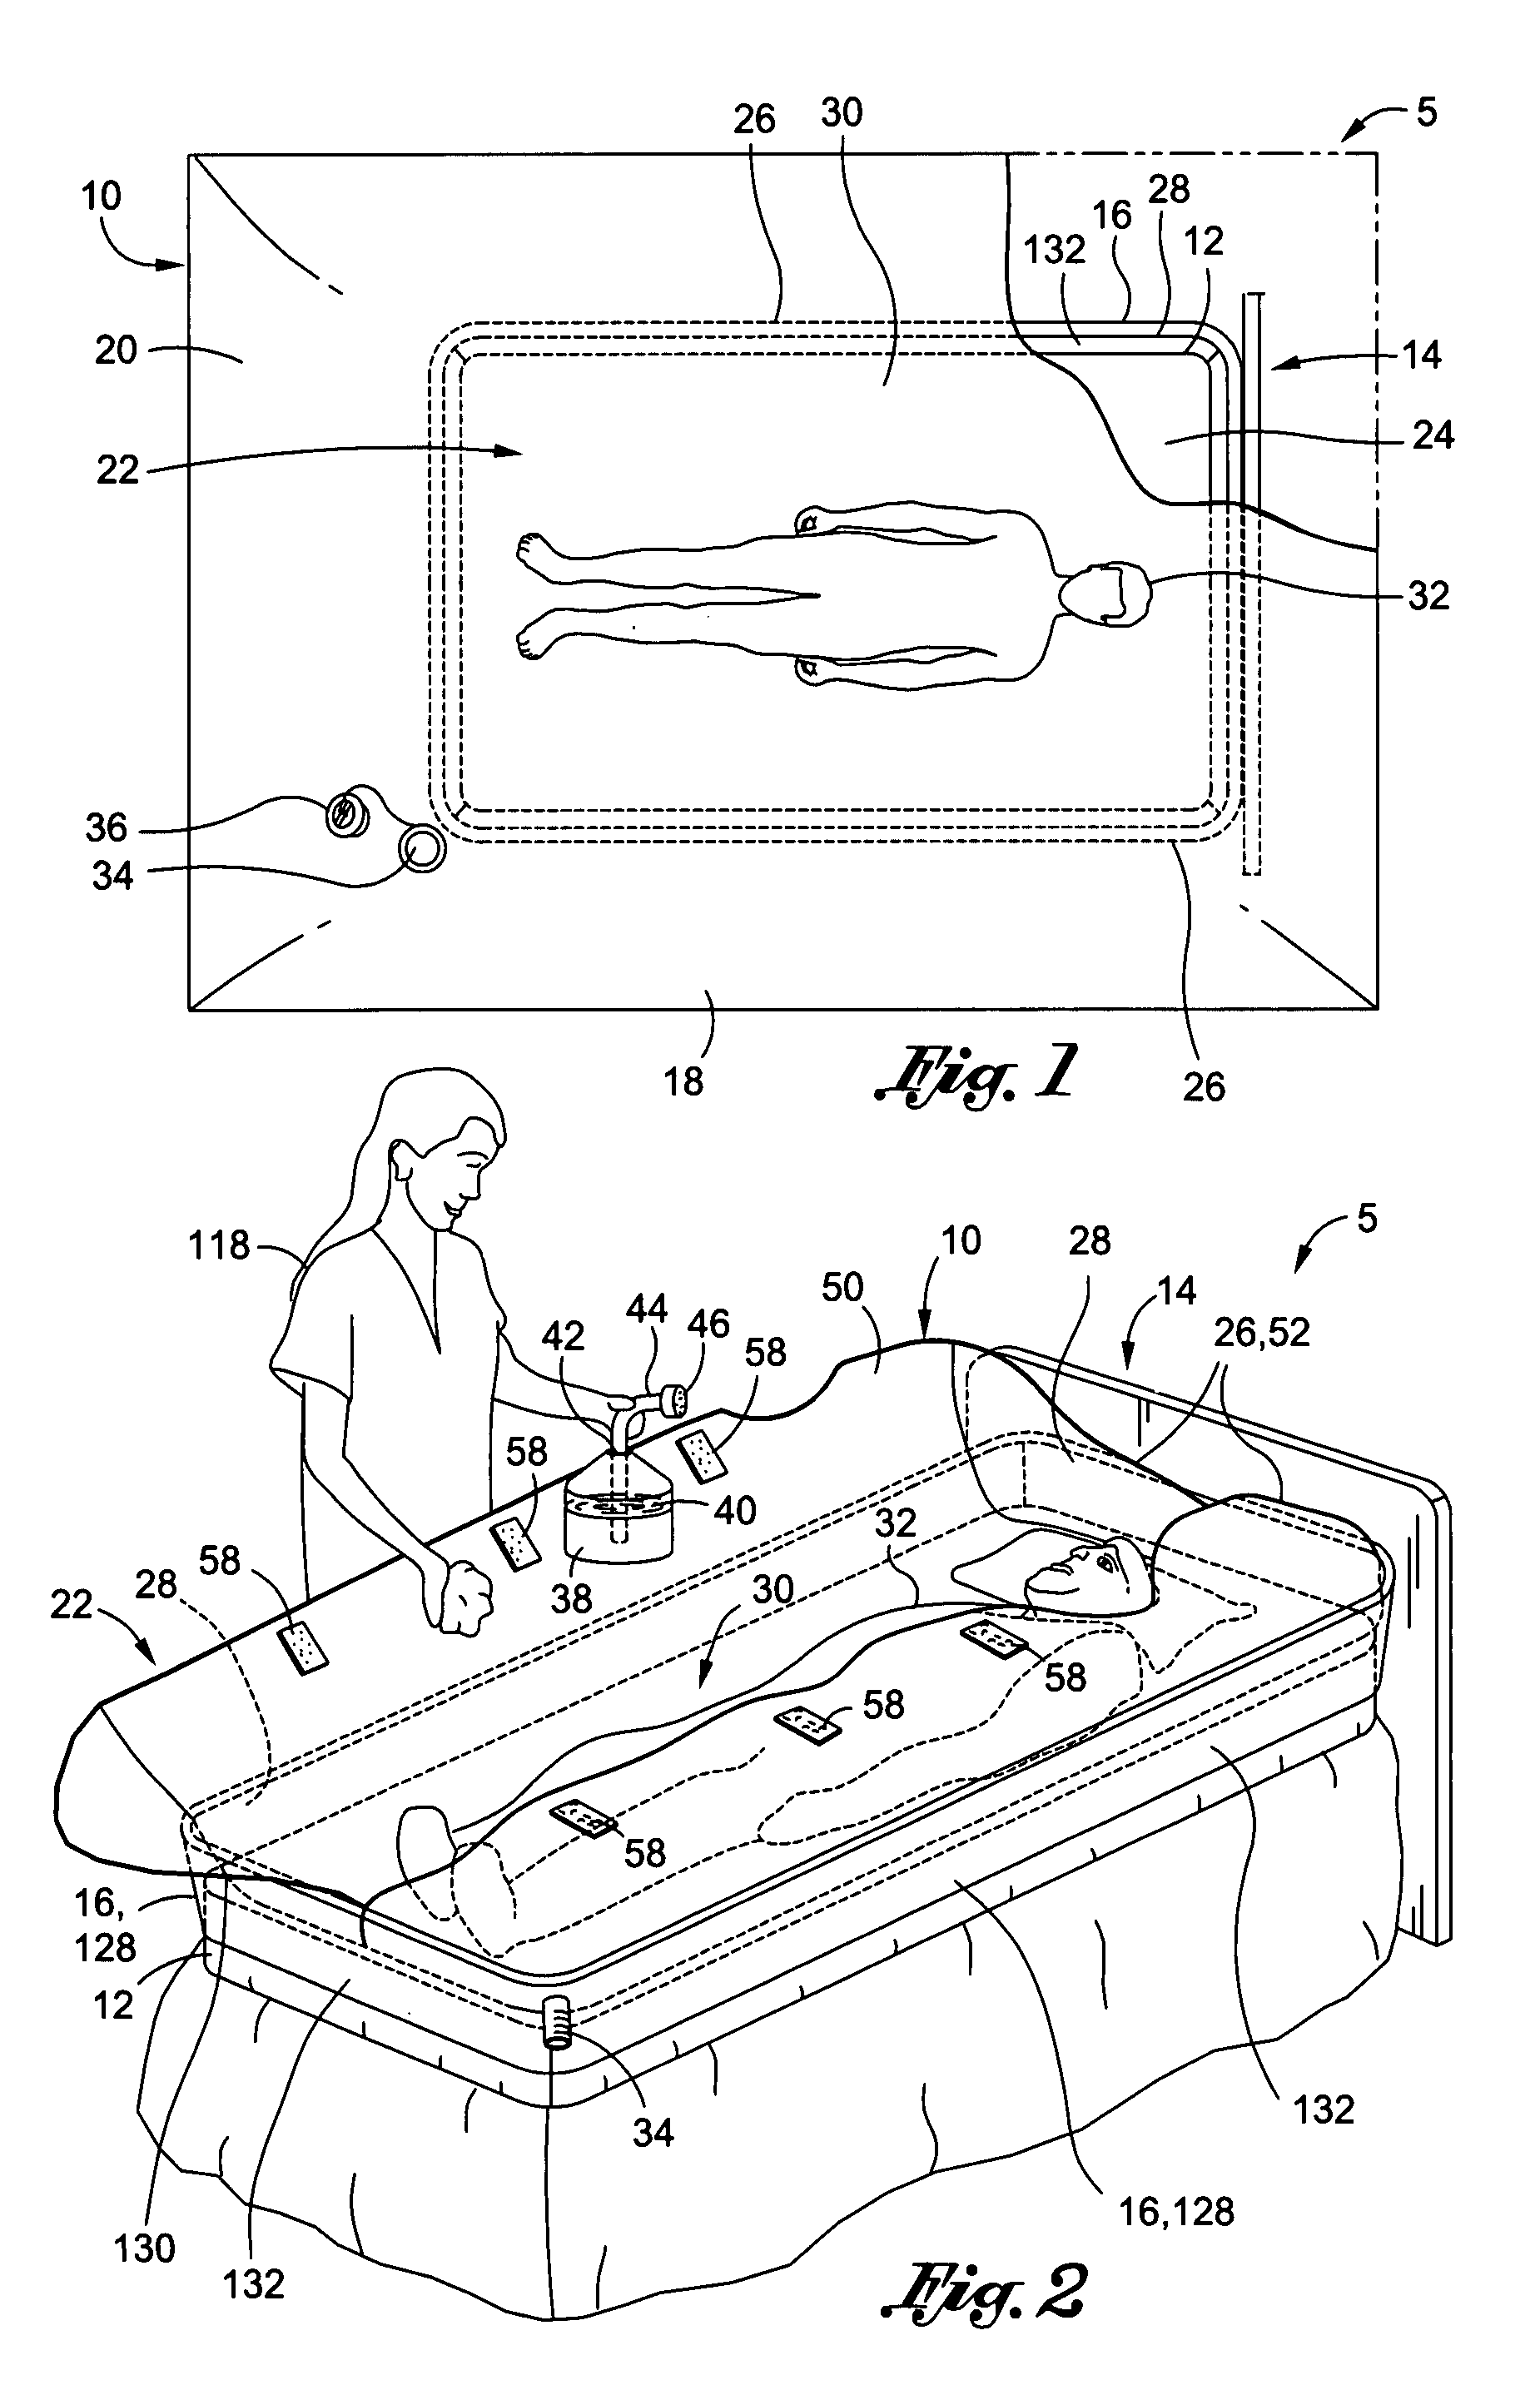 Universal bed bath envelope system